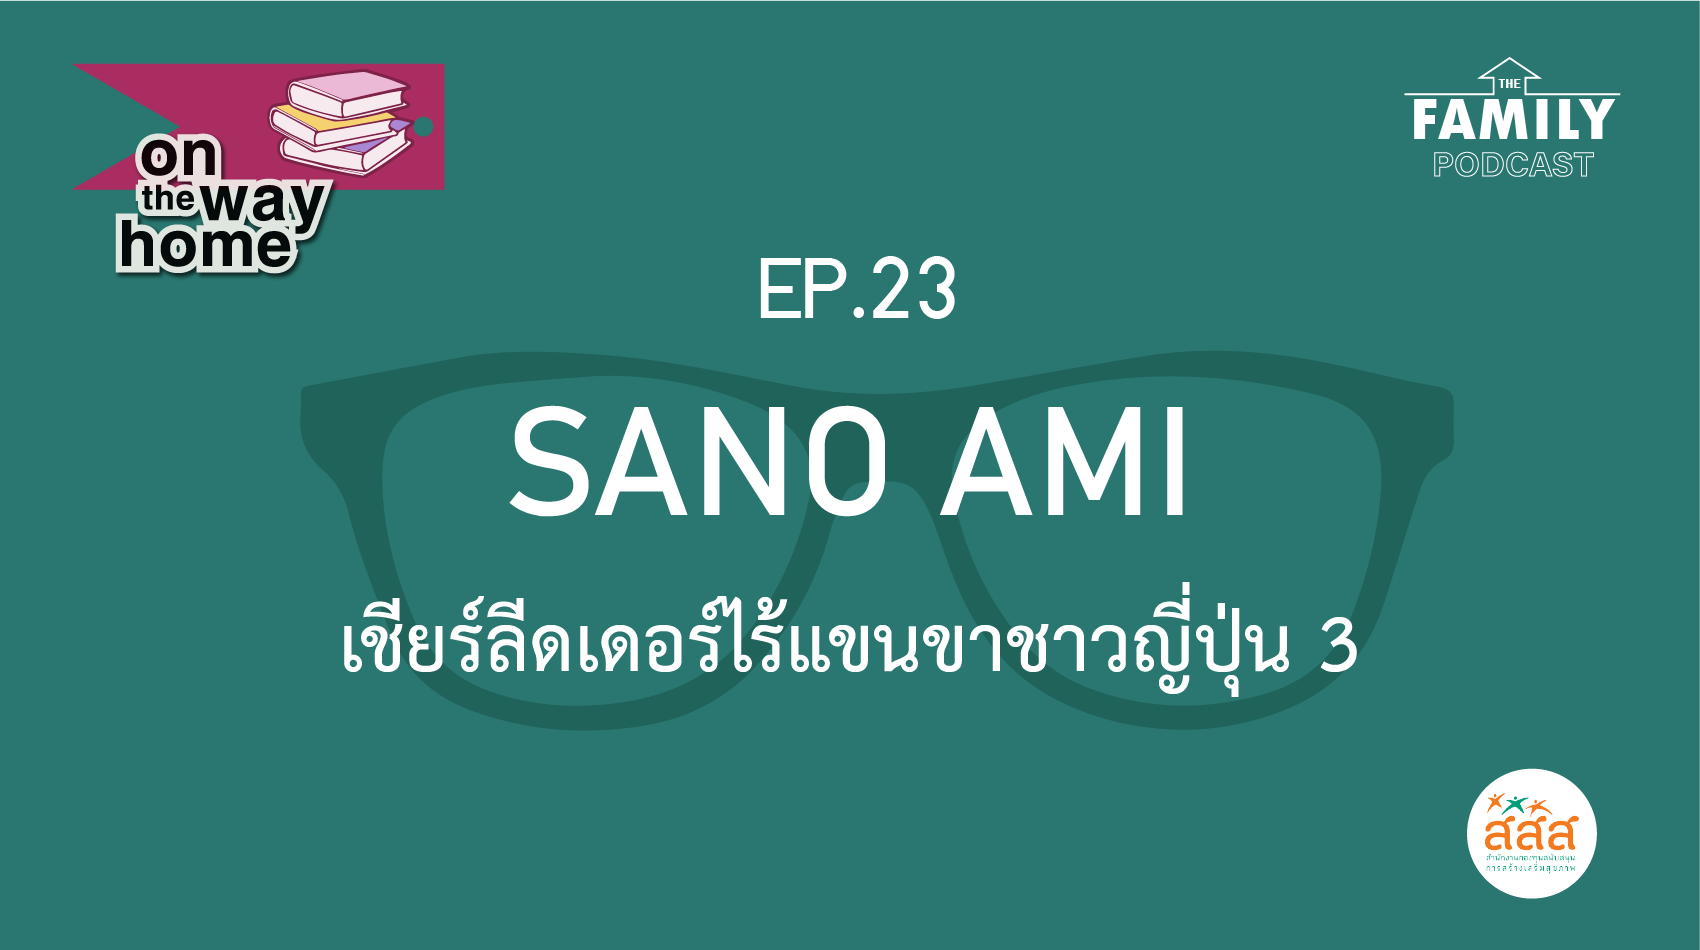 The Family Podcast On the Way Home EP.23 Sano Ami เชียร์ลีดเดอร์ไร้แขนขาชาวญี่ปุ่น 3